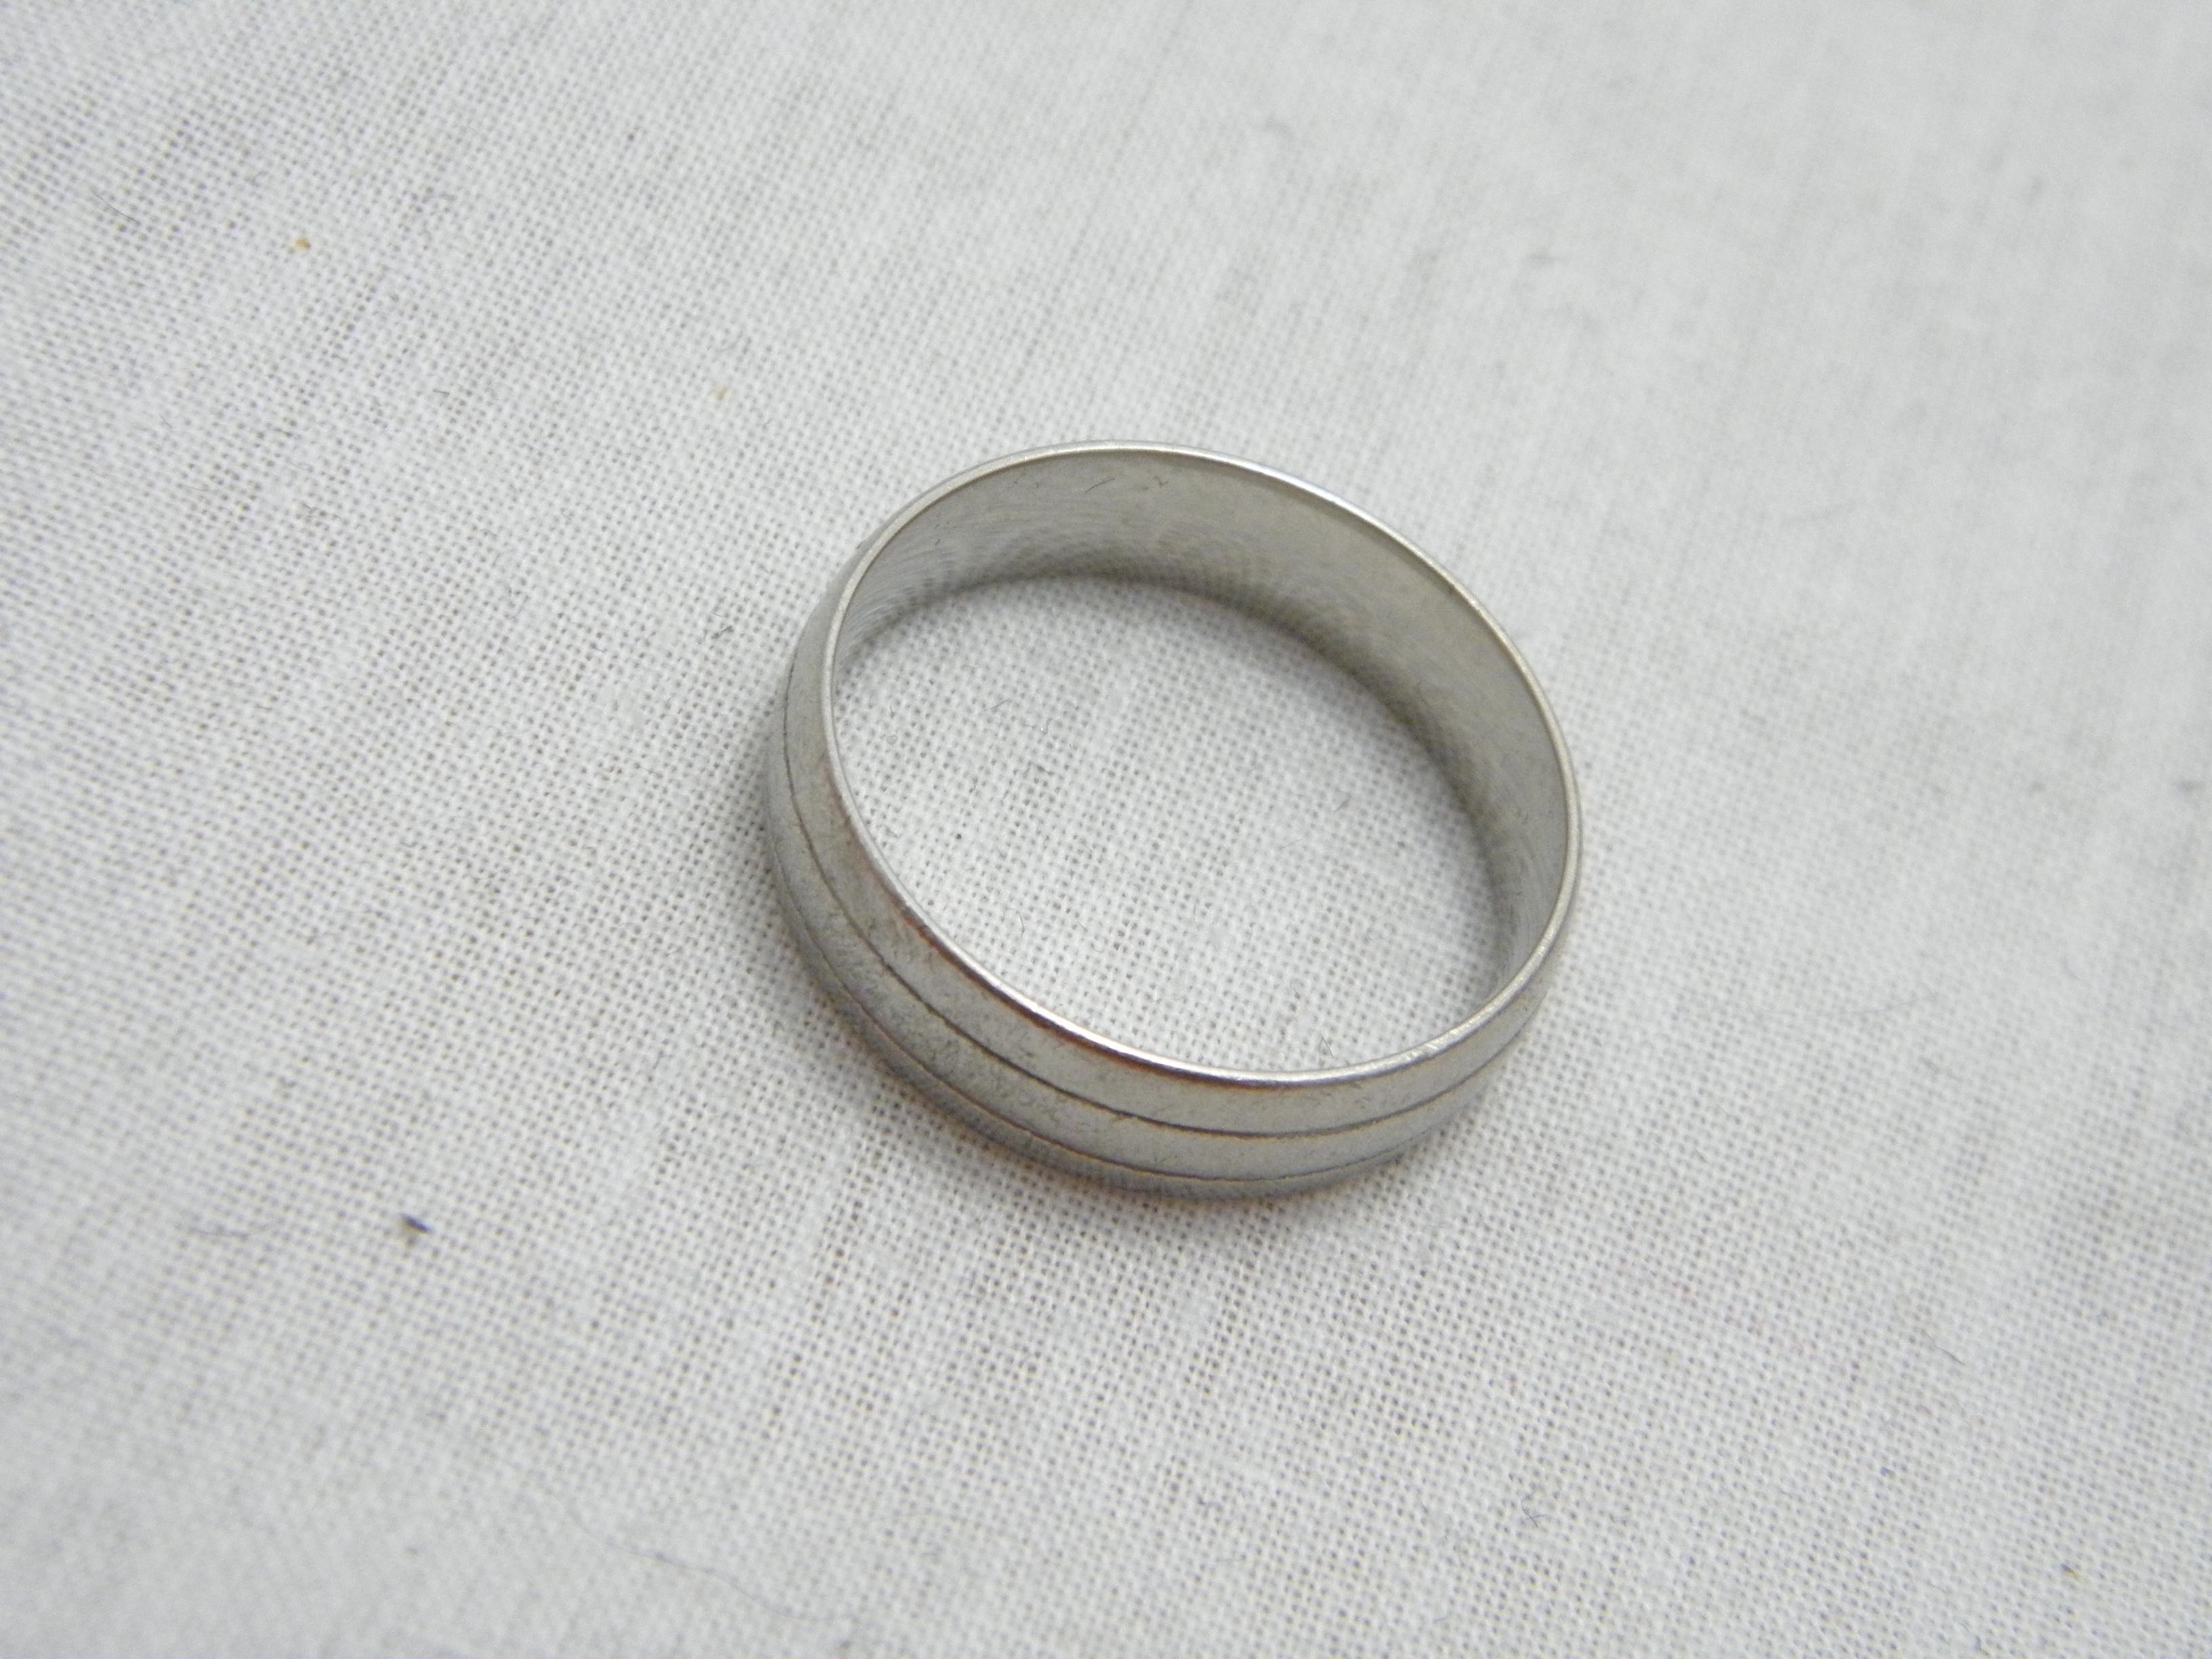 Vintage Palladium 6mm Wedding Ring Size W 11.25 950 Purity Band Bevelled Burnish For Sale 1